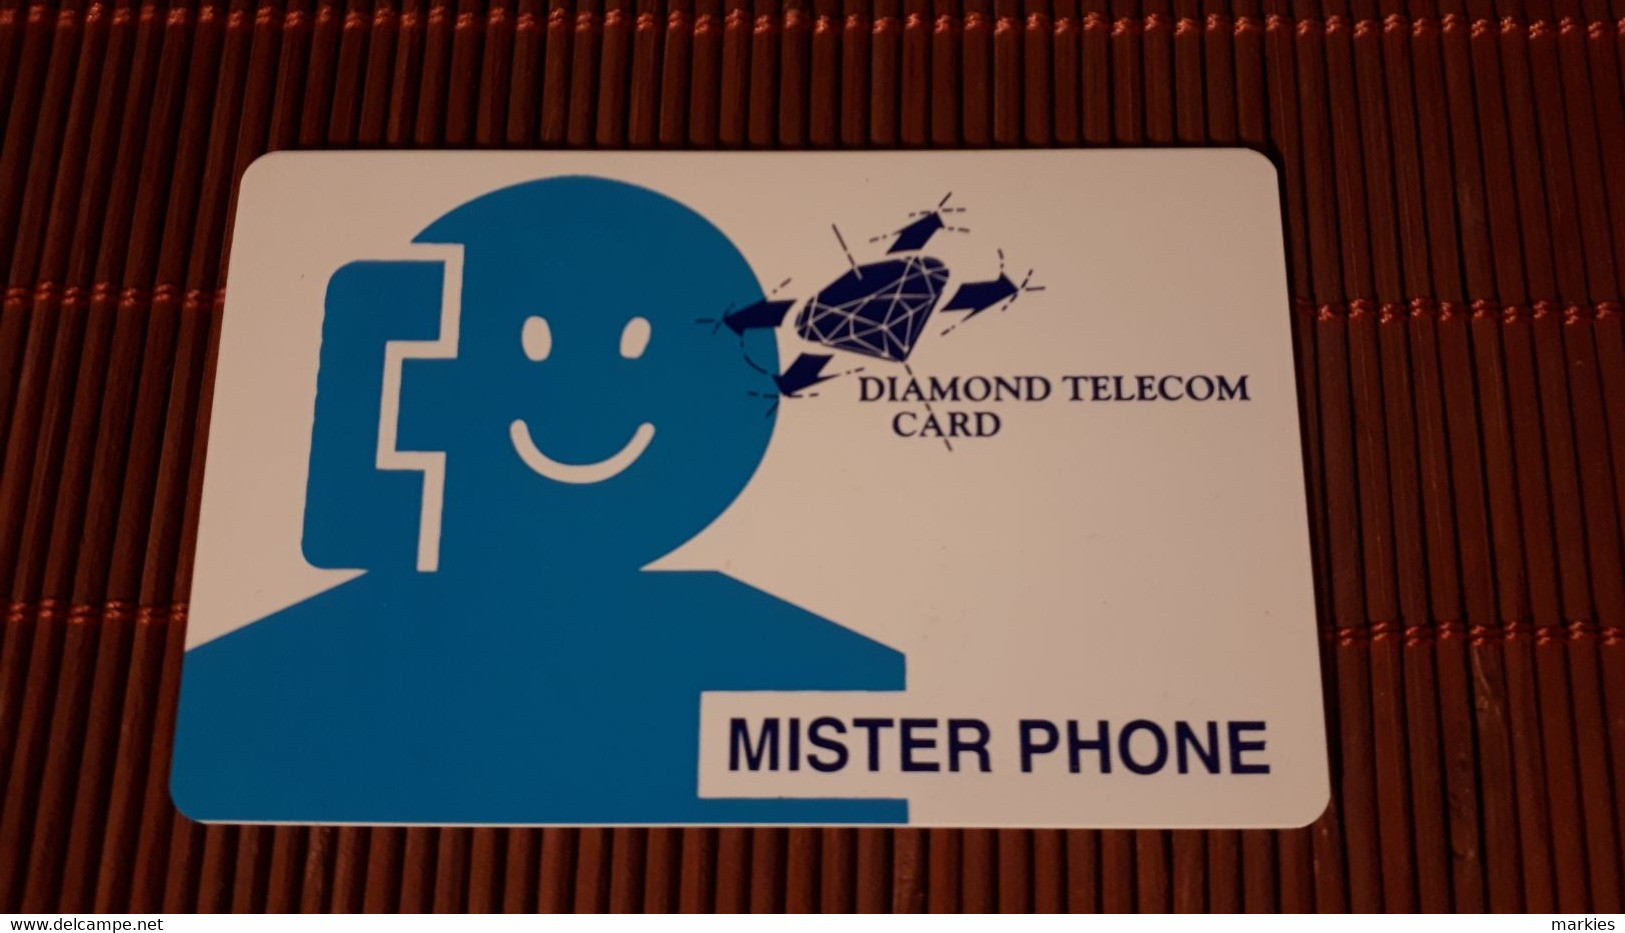 Diamond Telecom 1 Prepaidcard Mister Phone (Mint,New) Expiry Dat 31-1-97  Rare - Origine Sconosciuta